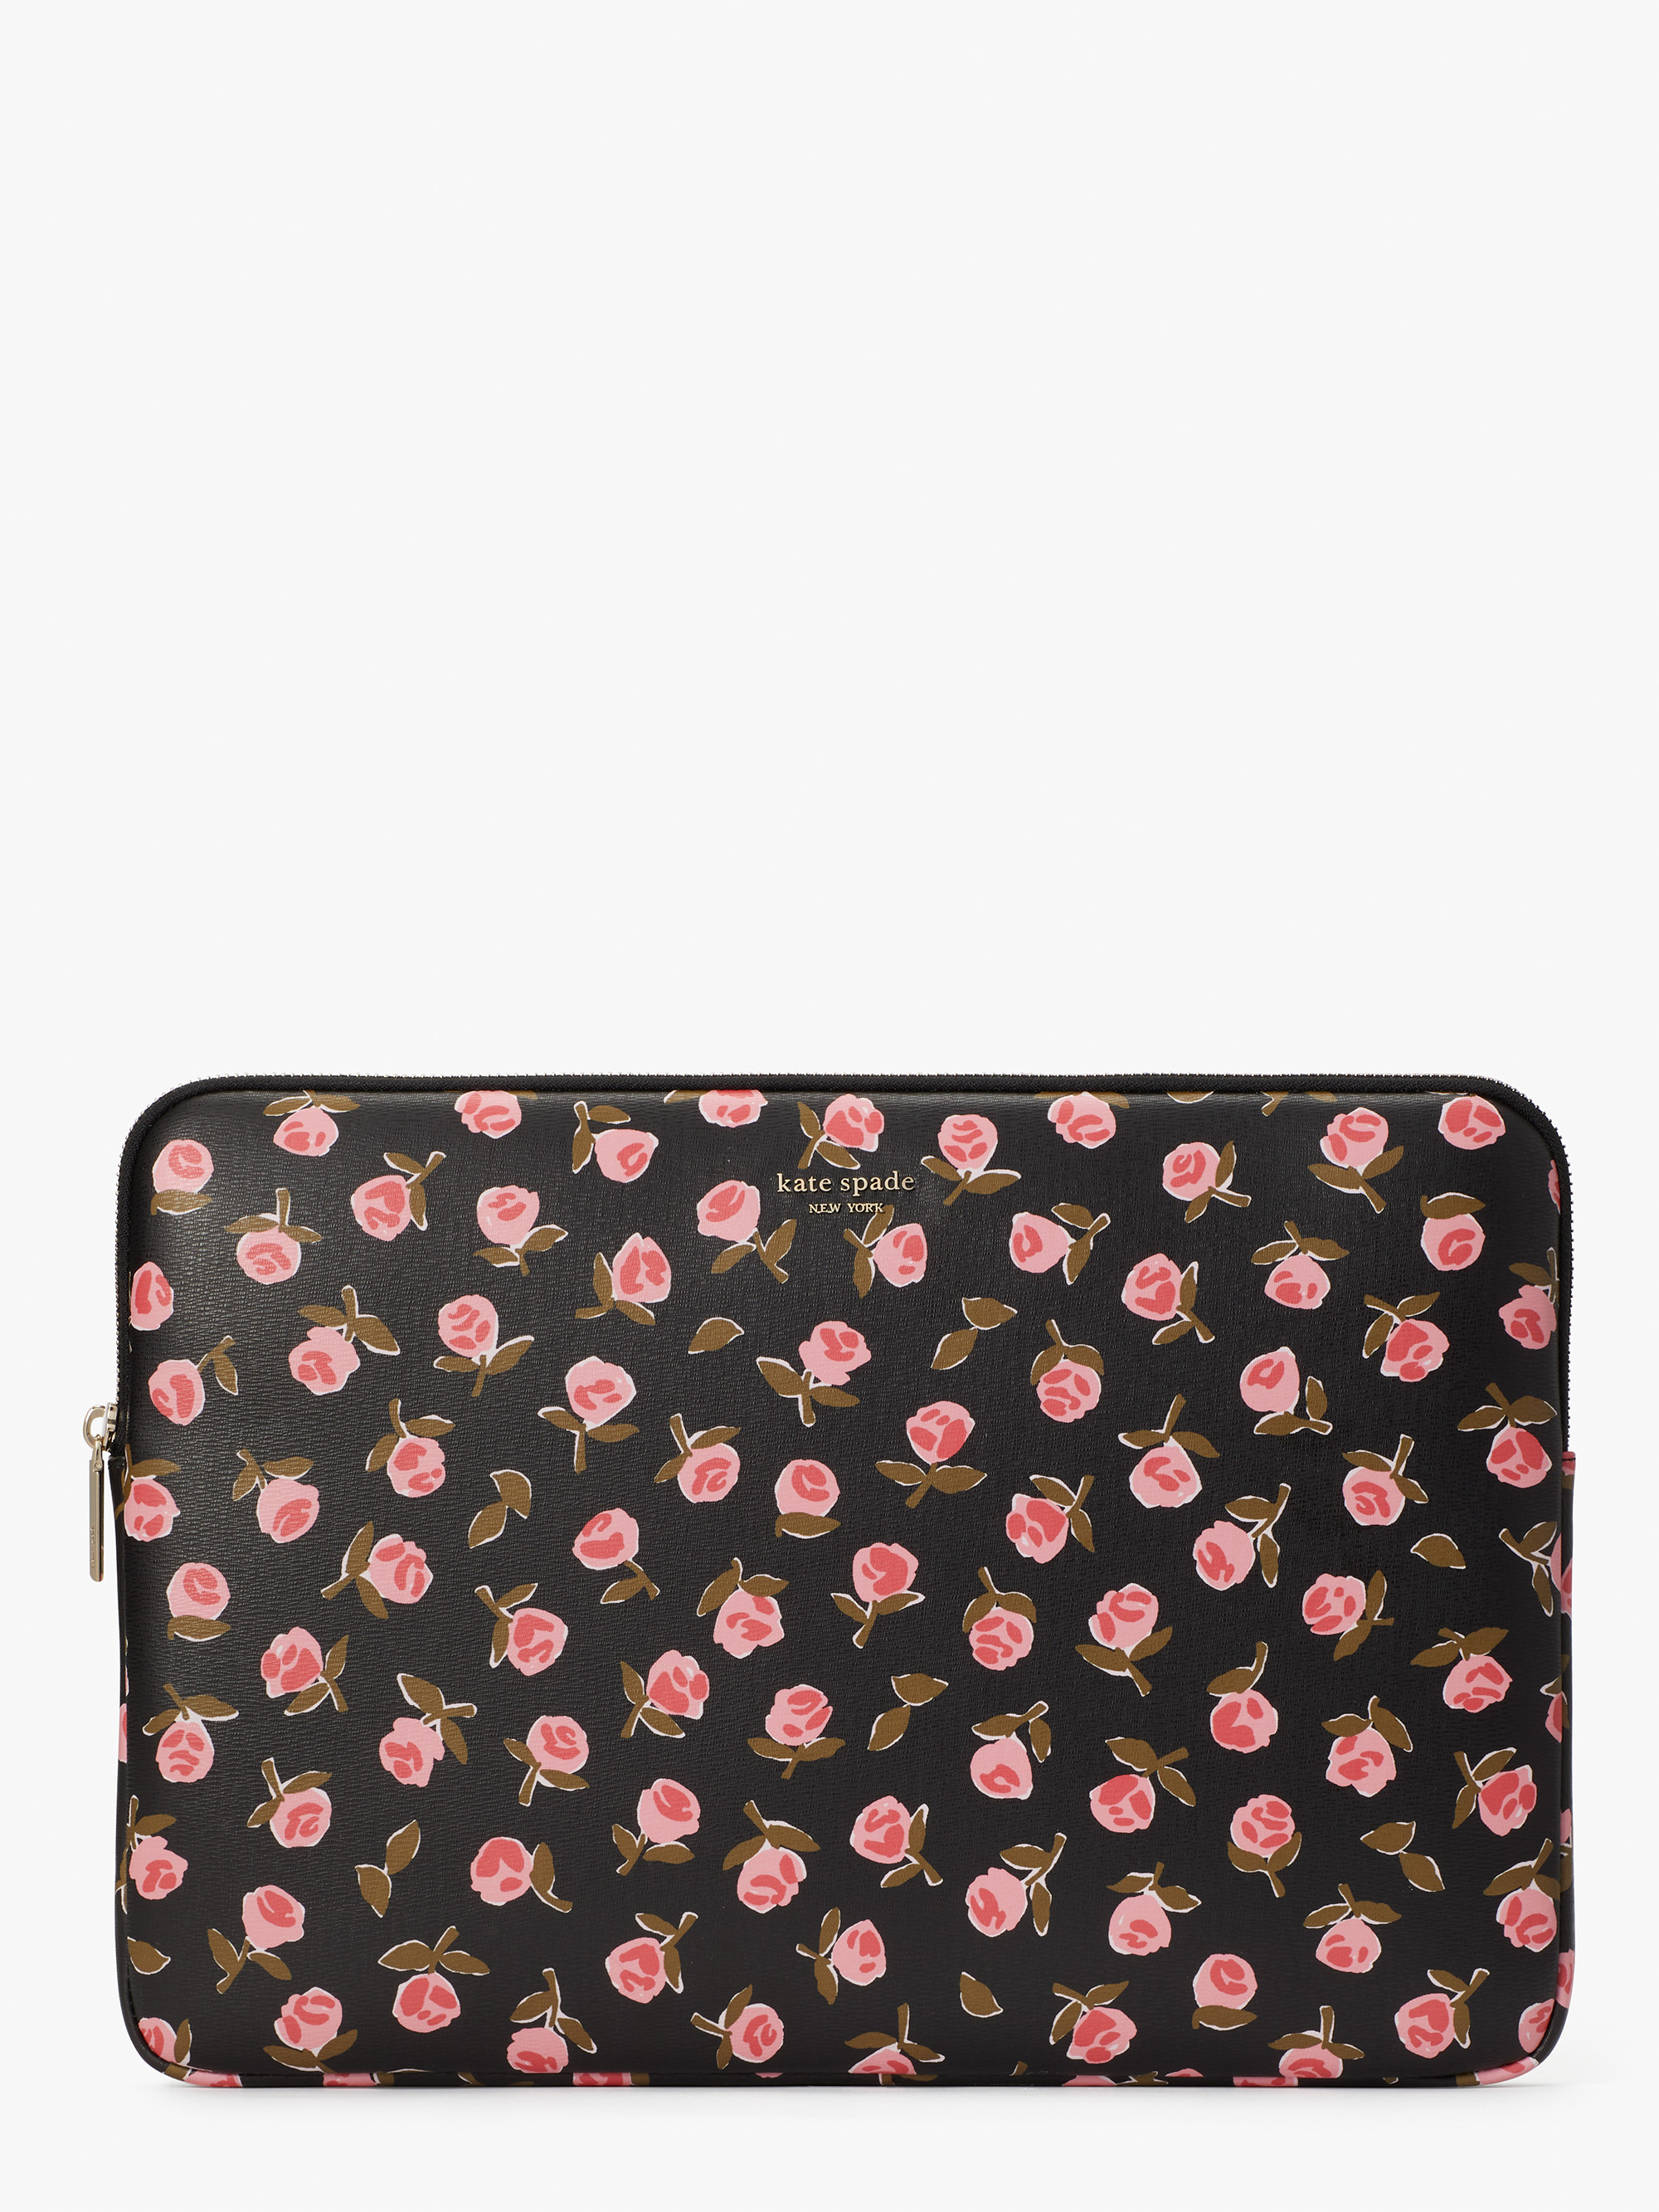 spencer ditsy rose universal laptop sleeve